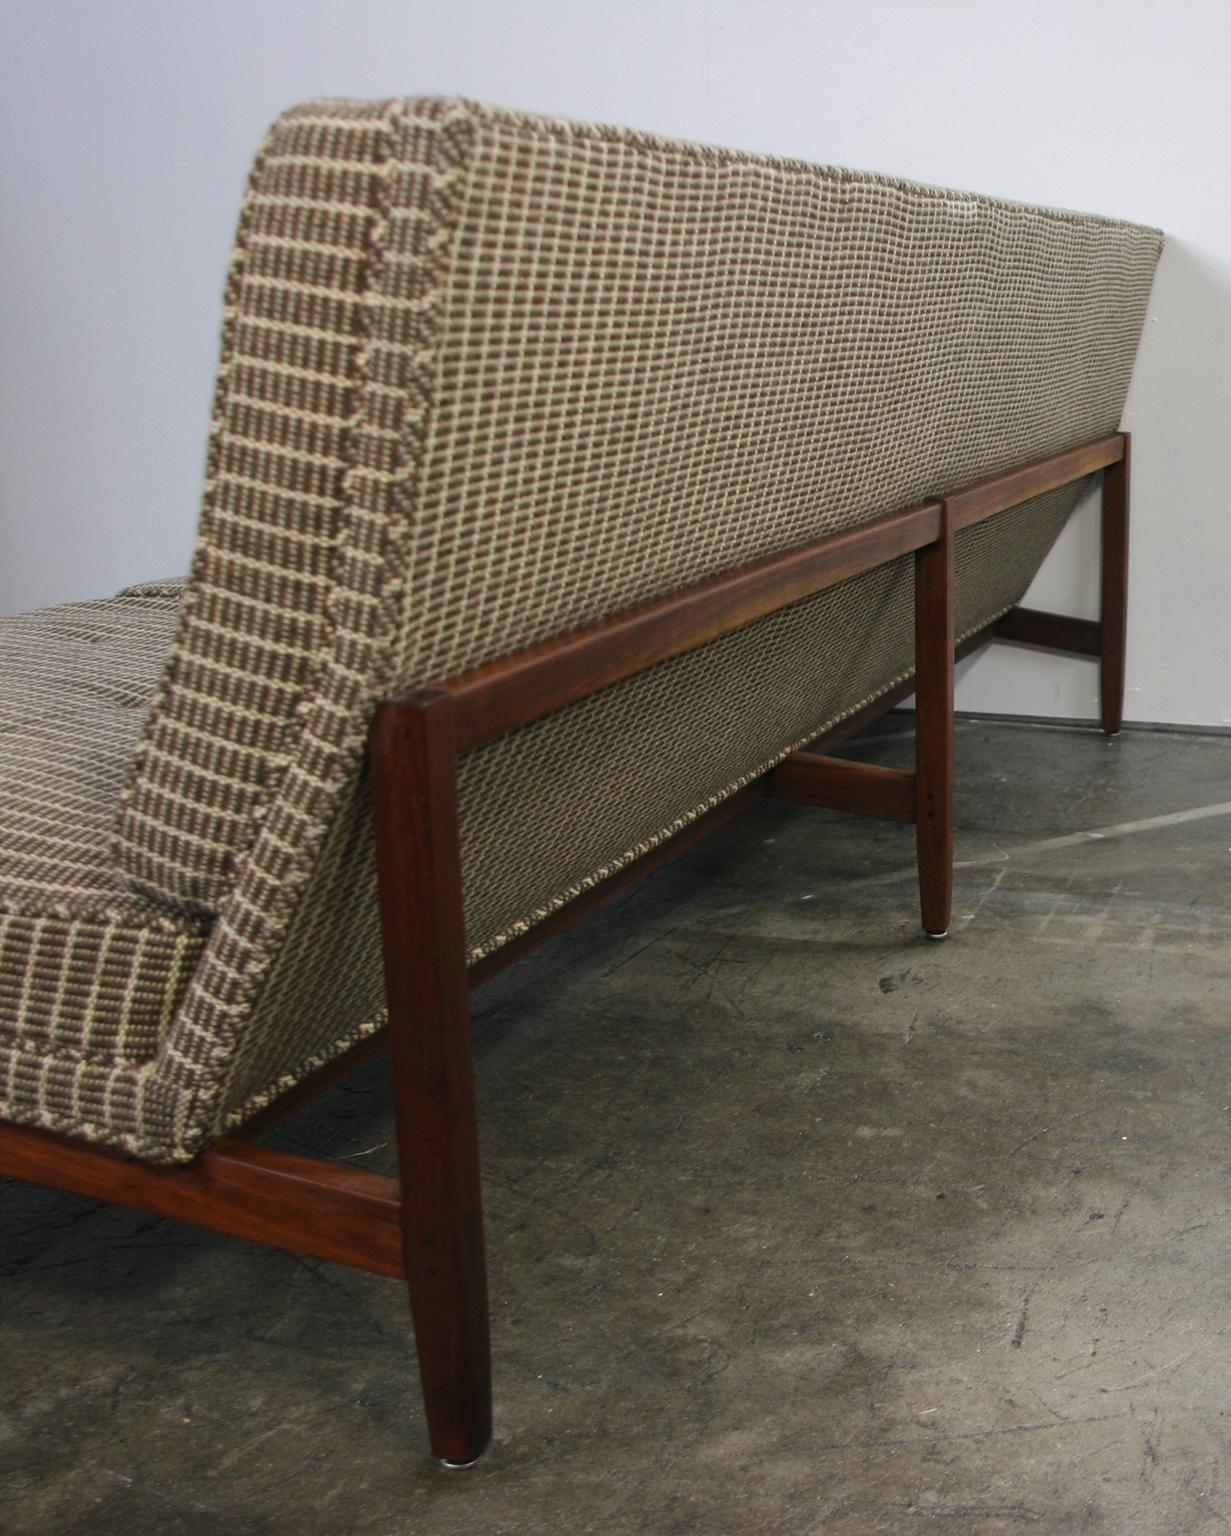 20th Century Midcentury Florence Knoll Sofa #53 T Three-Seat Solid Teak Base Wool Upholstery